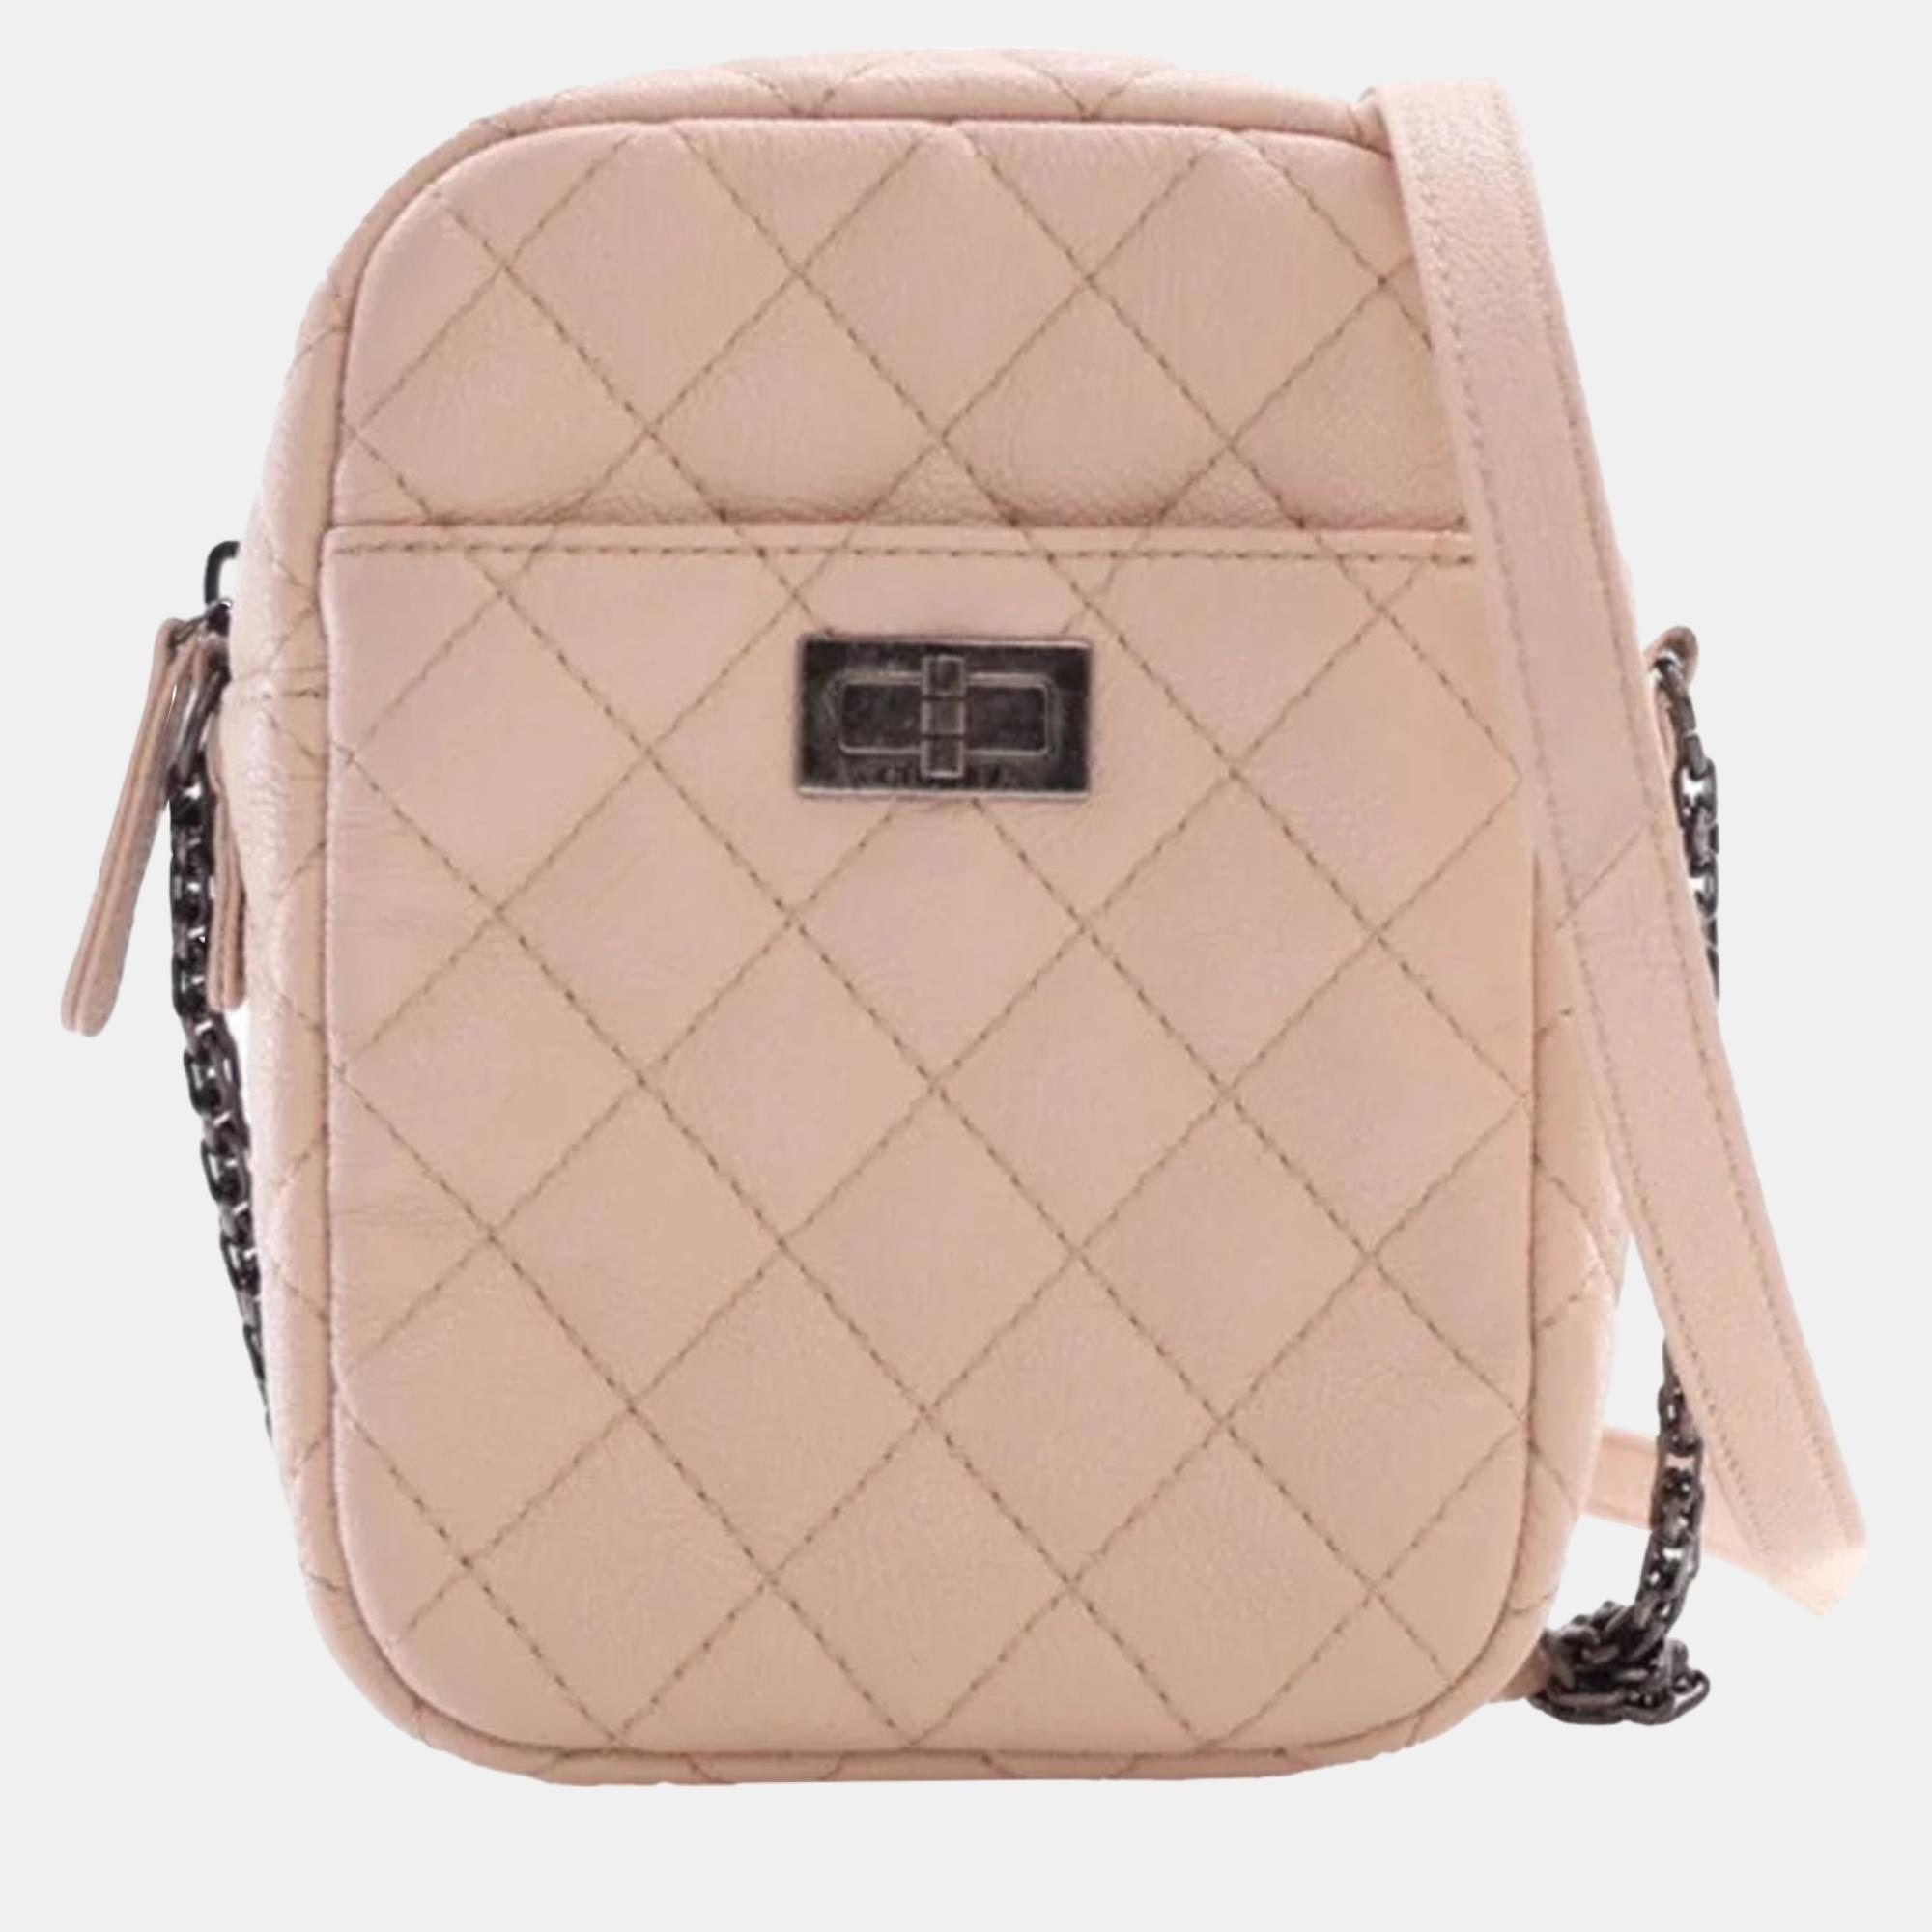 Chanel pink calfskin 16p reissue camera bag